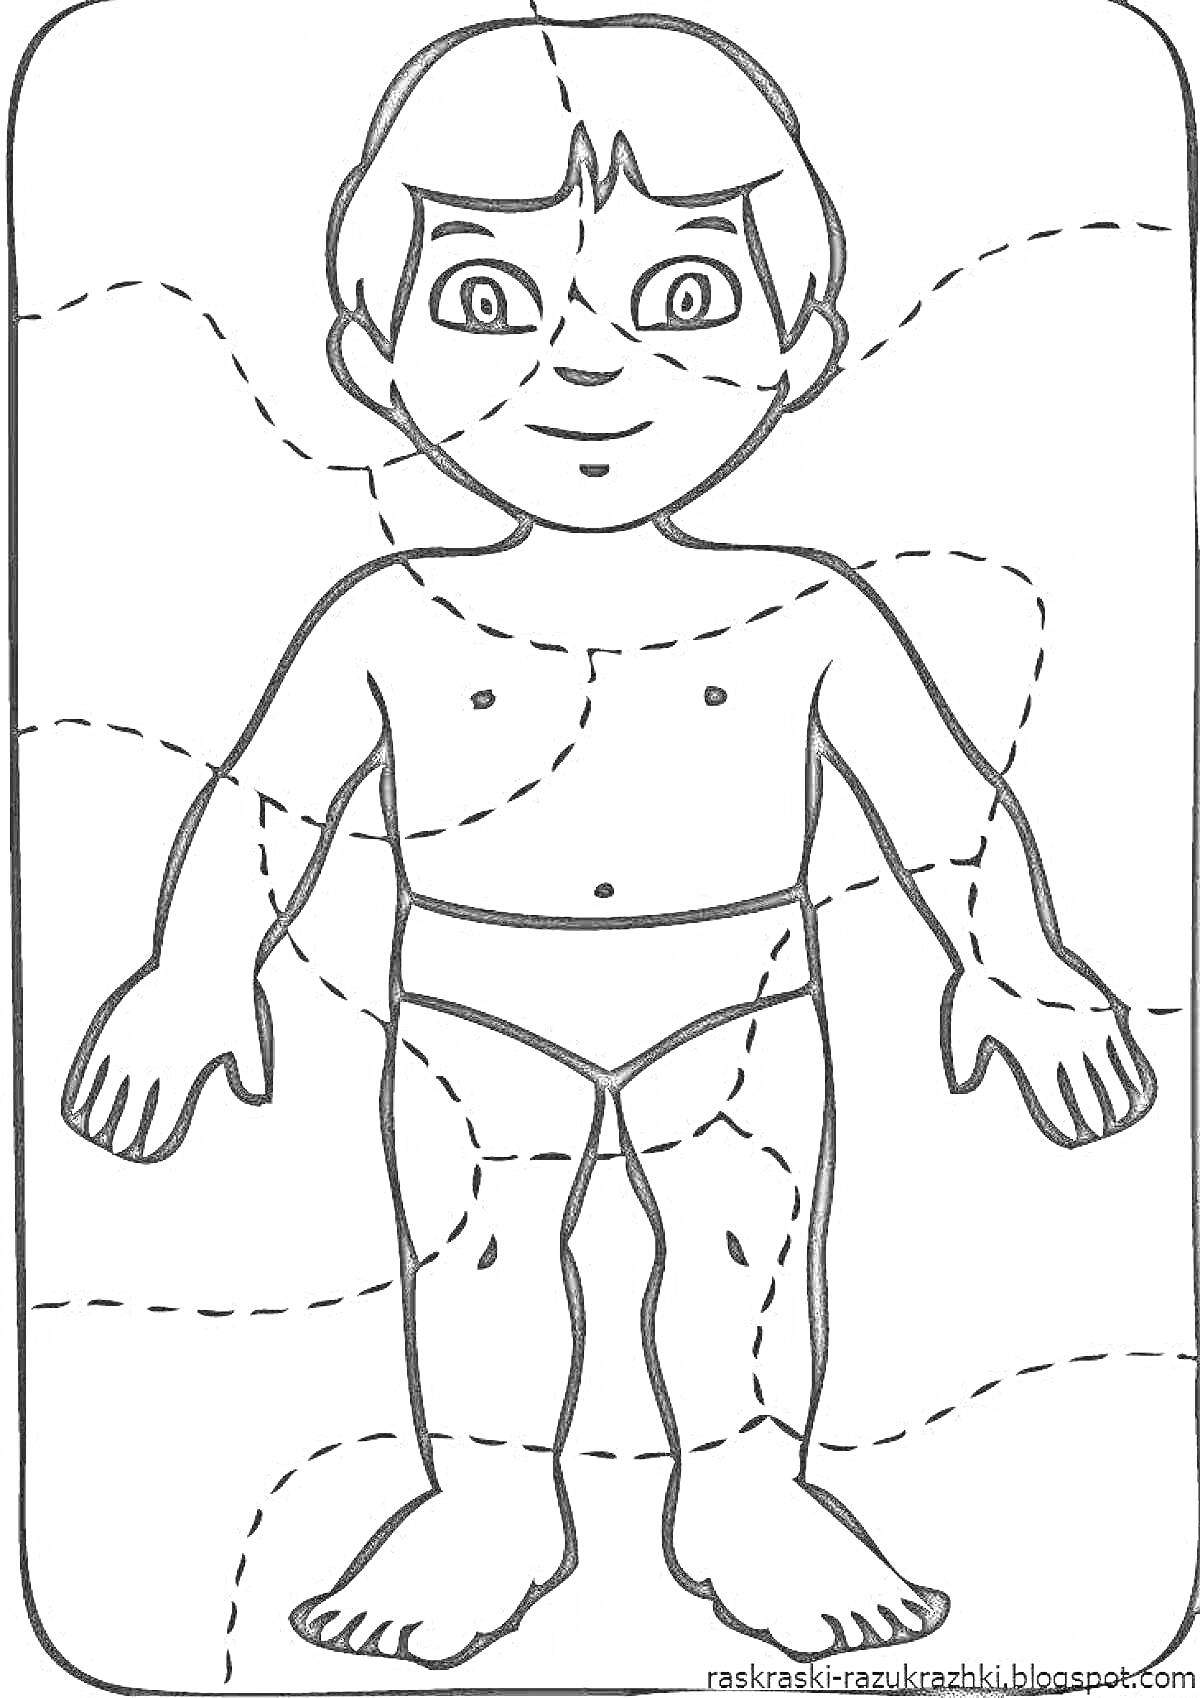 На раскраске изображено: Тело человека, Голова, Плечи, Руки, Ноги, Кисти, Ребёнок, Анатомия, Части тела